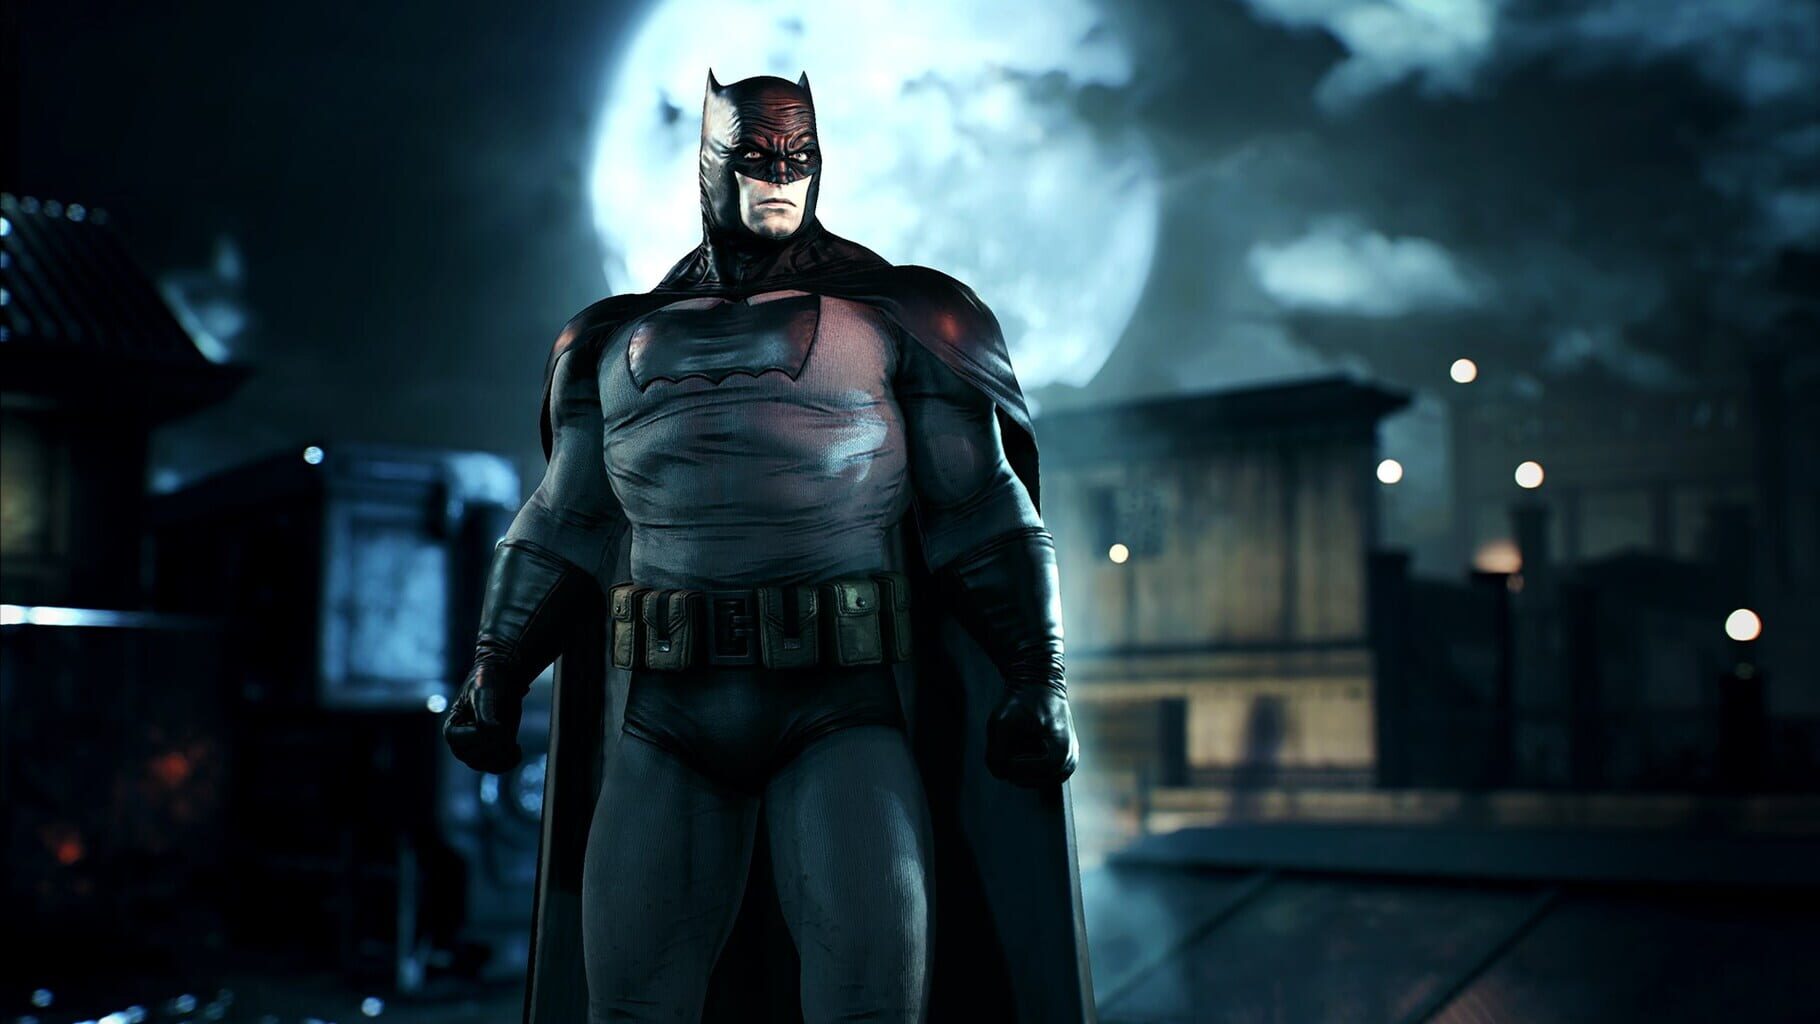 Captura de pantalla - Batman: Arkham Knight - Dark Knight Returns Batman Skin